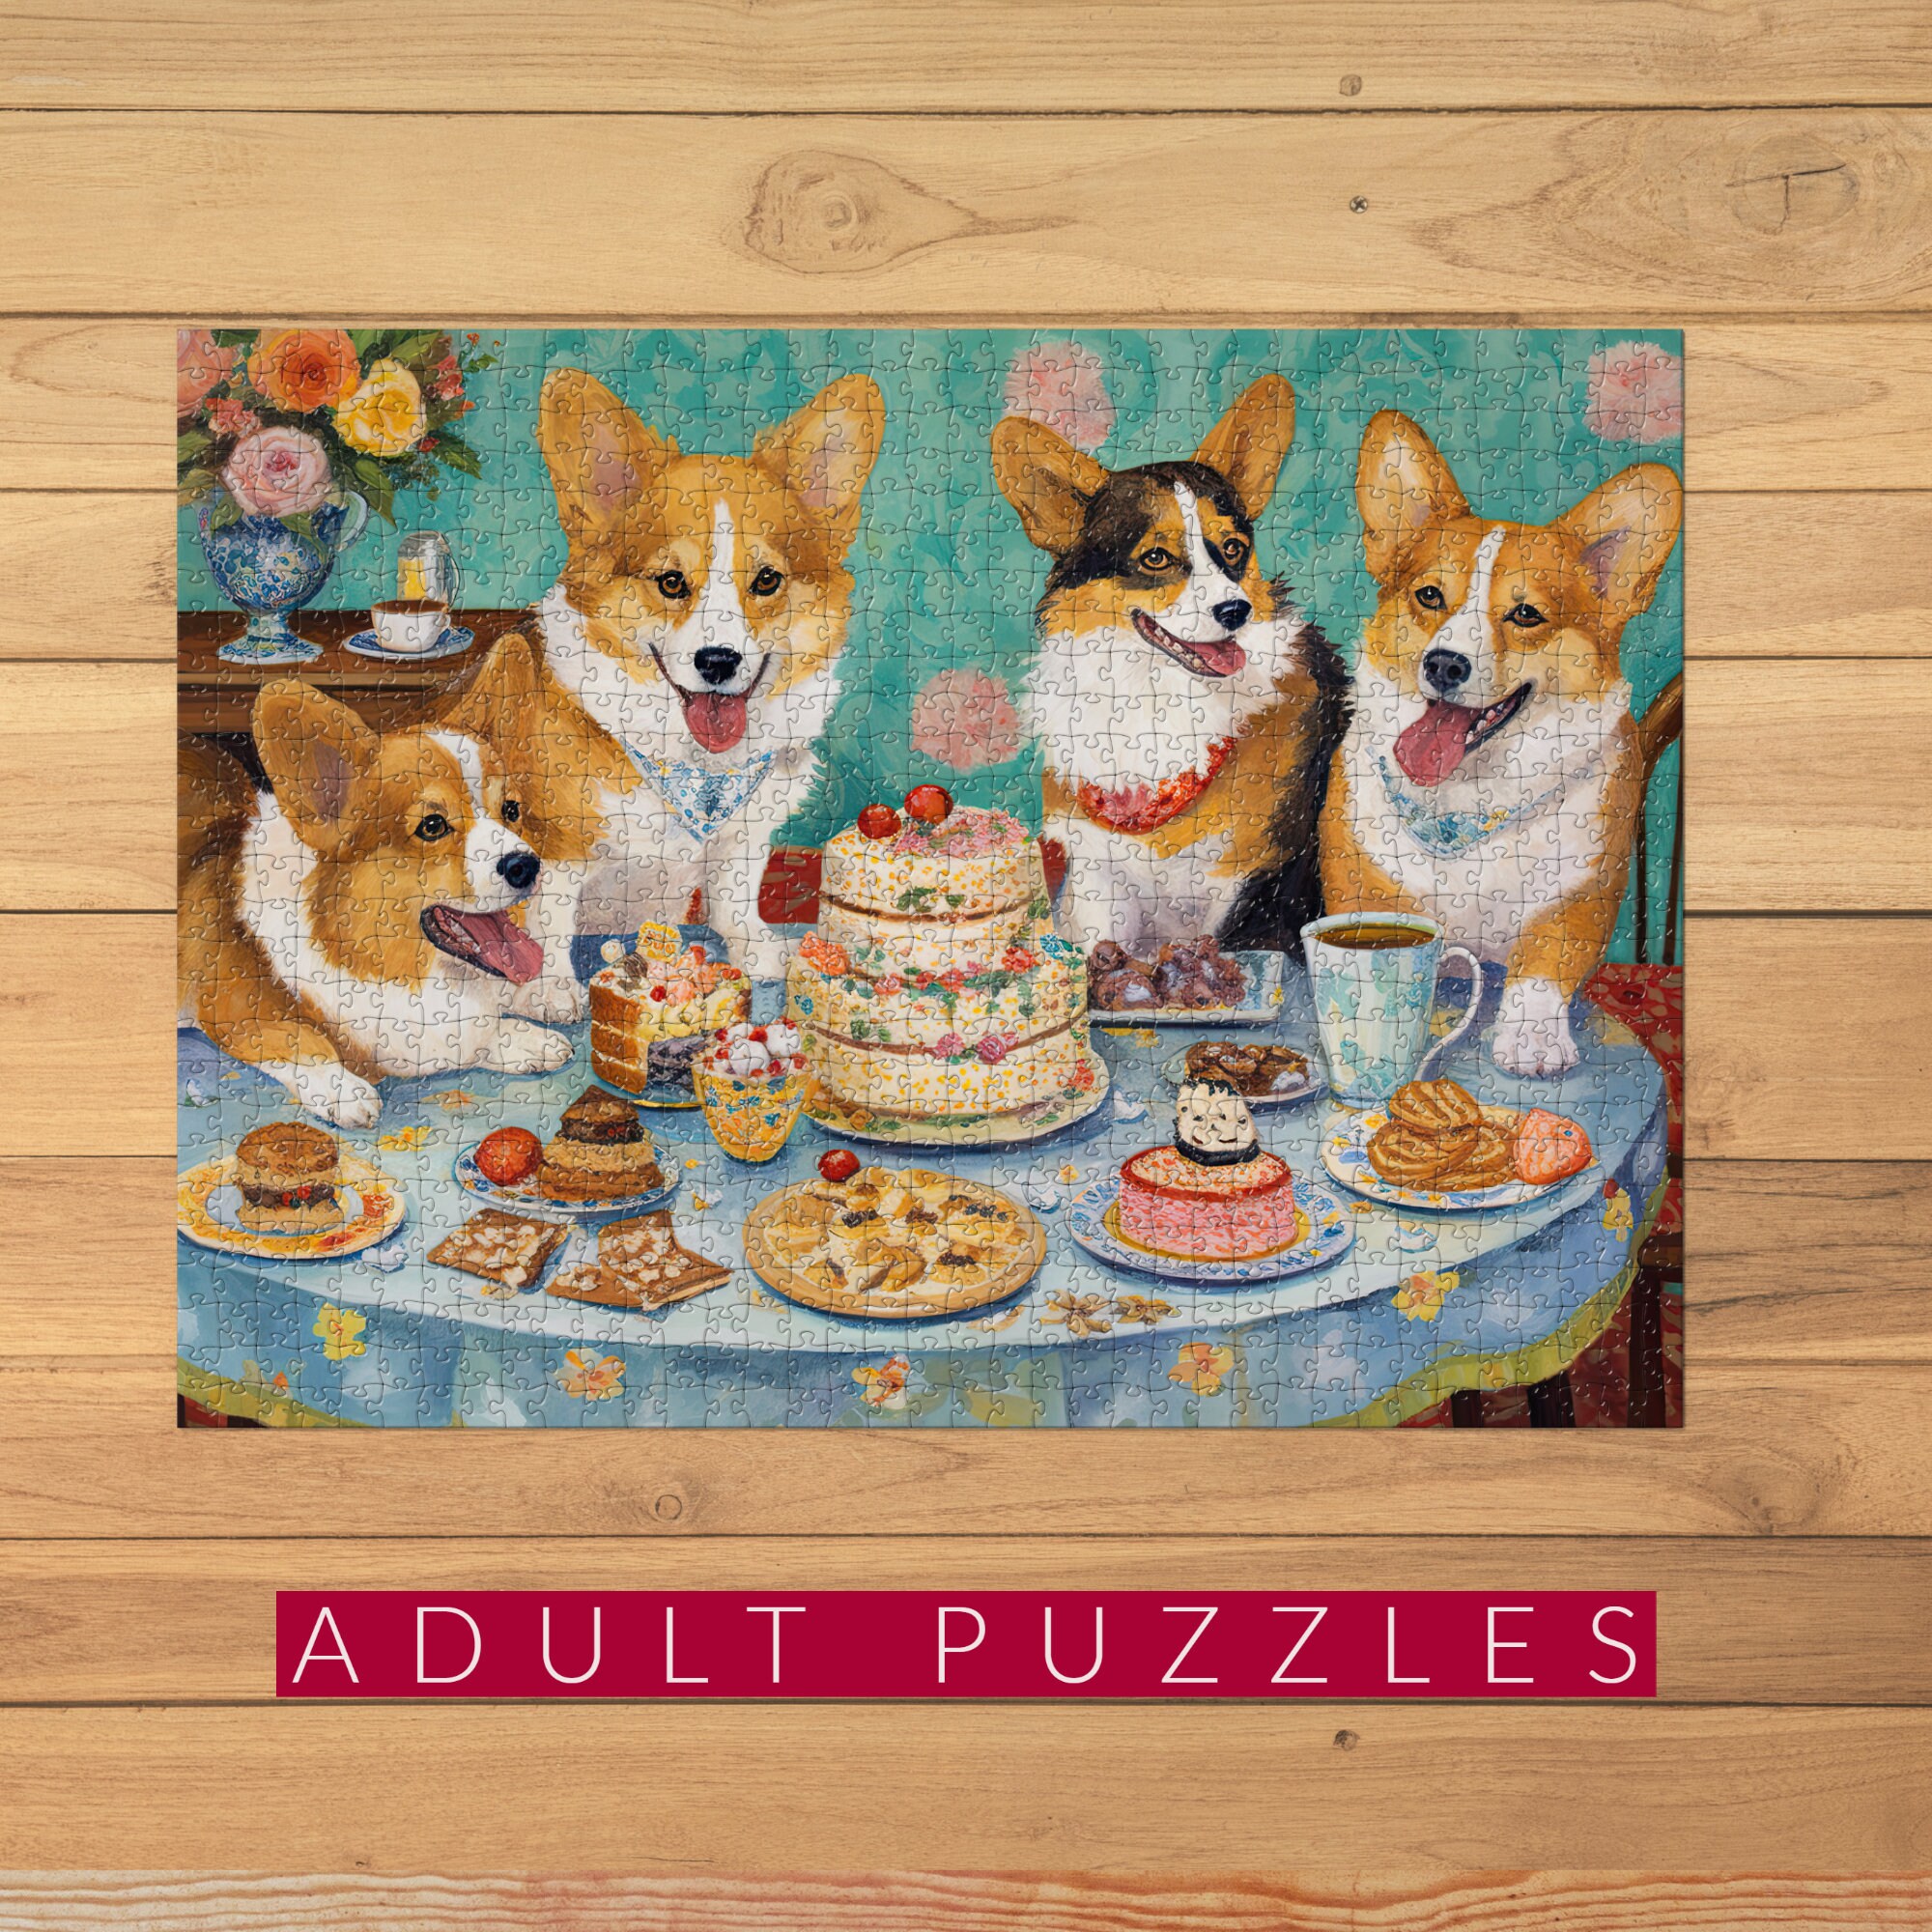 Corgi Jigsaw Puzzle, Dog Puzzle, Puzzles for Adults, Adult Puzzles, Corgi  Gifts, Corgi Art, Gift for Dog Lover, Dog Art, Corgi Prints, 